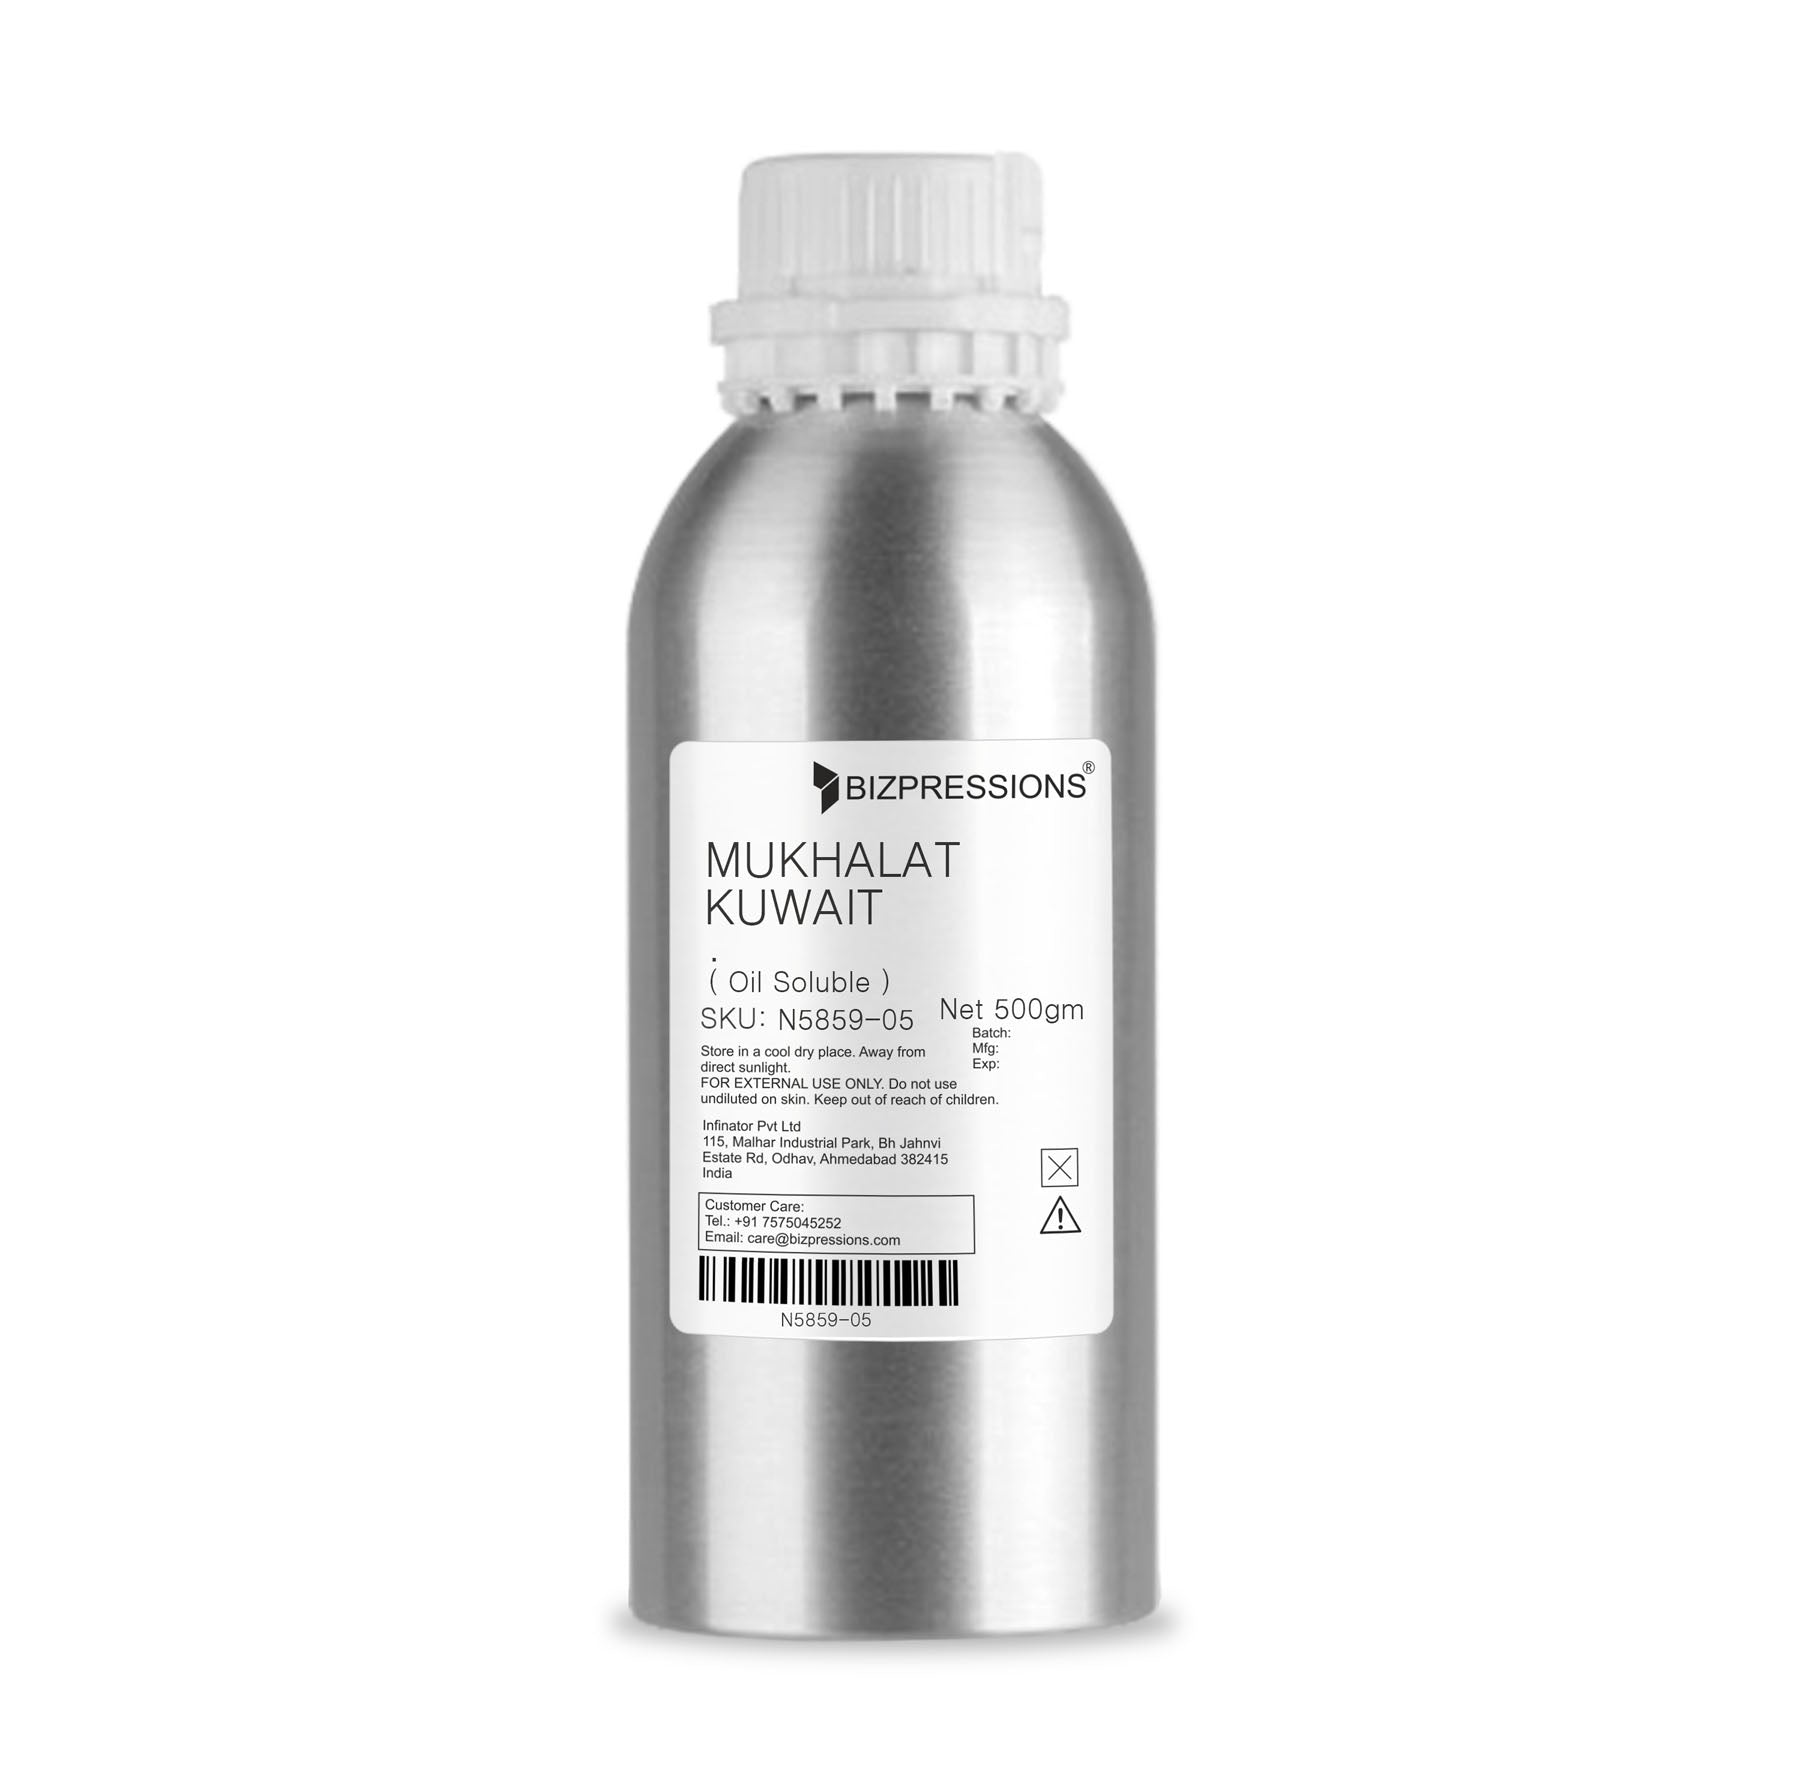 MUKHALAT KUWAIT - Fragrance ( Oil Soluble ) - 500 gm